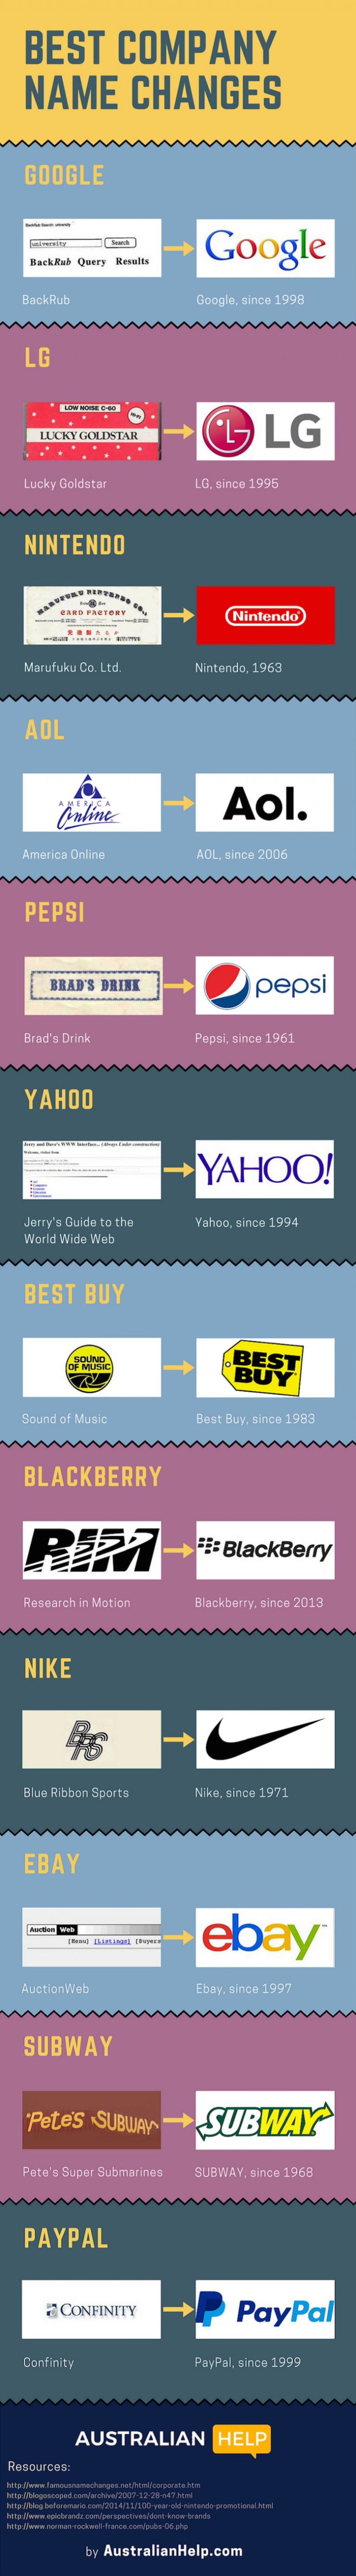 original-names-logos-famous-companies-infographic-768x5553